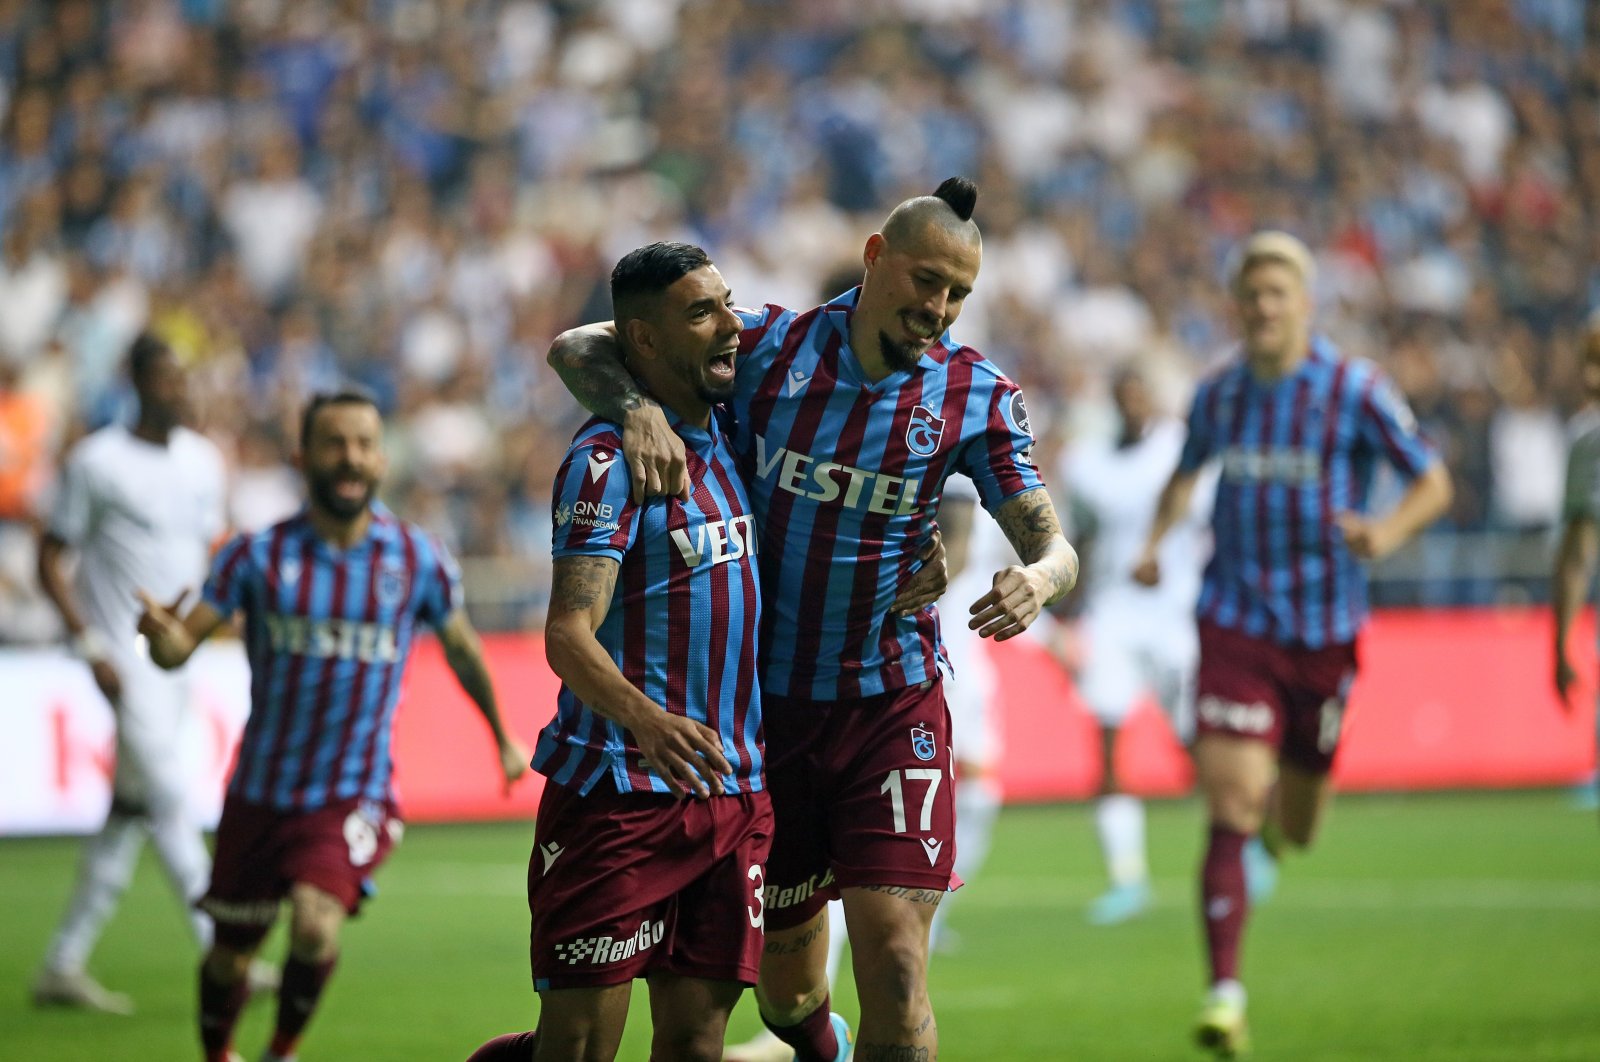 Trabzonspor&#039;s Bruno Peres (L) celebrates with teammate Marek Hamsik after scoring a goal in a Süper Lig match against Adana Demirspor, Adana, Turkey, April 23, 2022. (AA Photo)